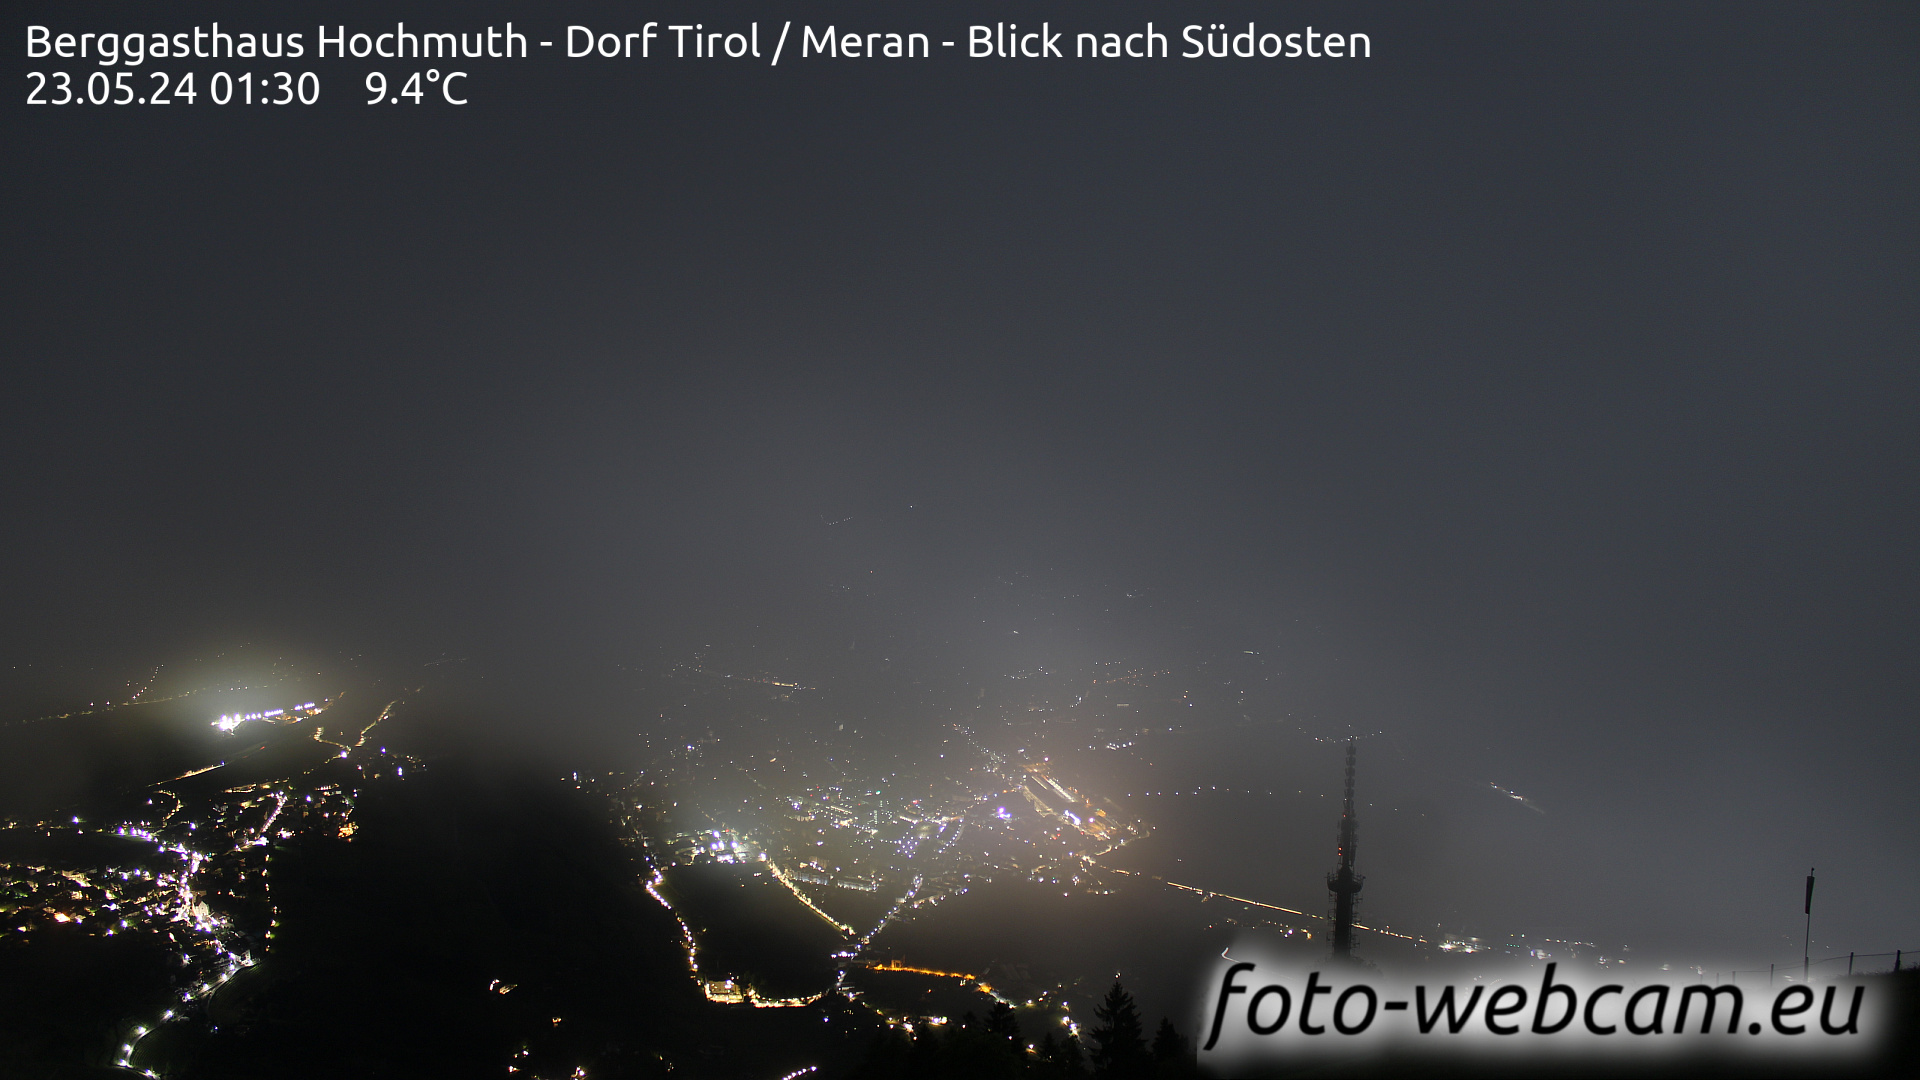 Dorf Tirol Me. 01:56